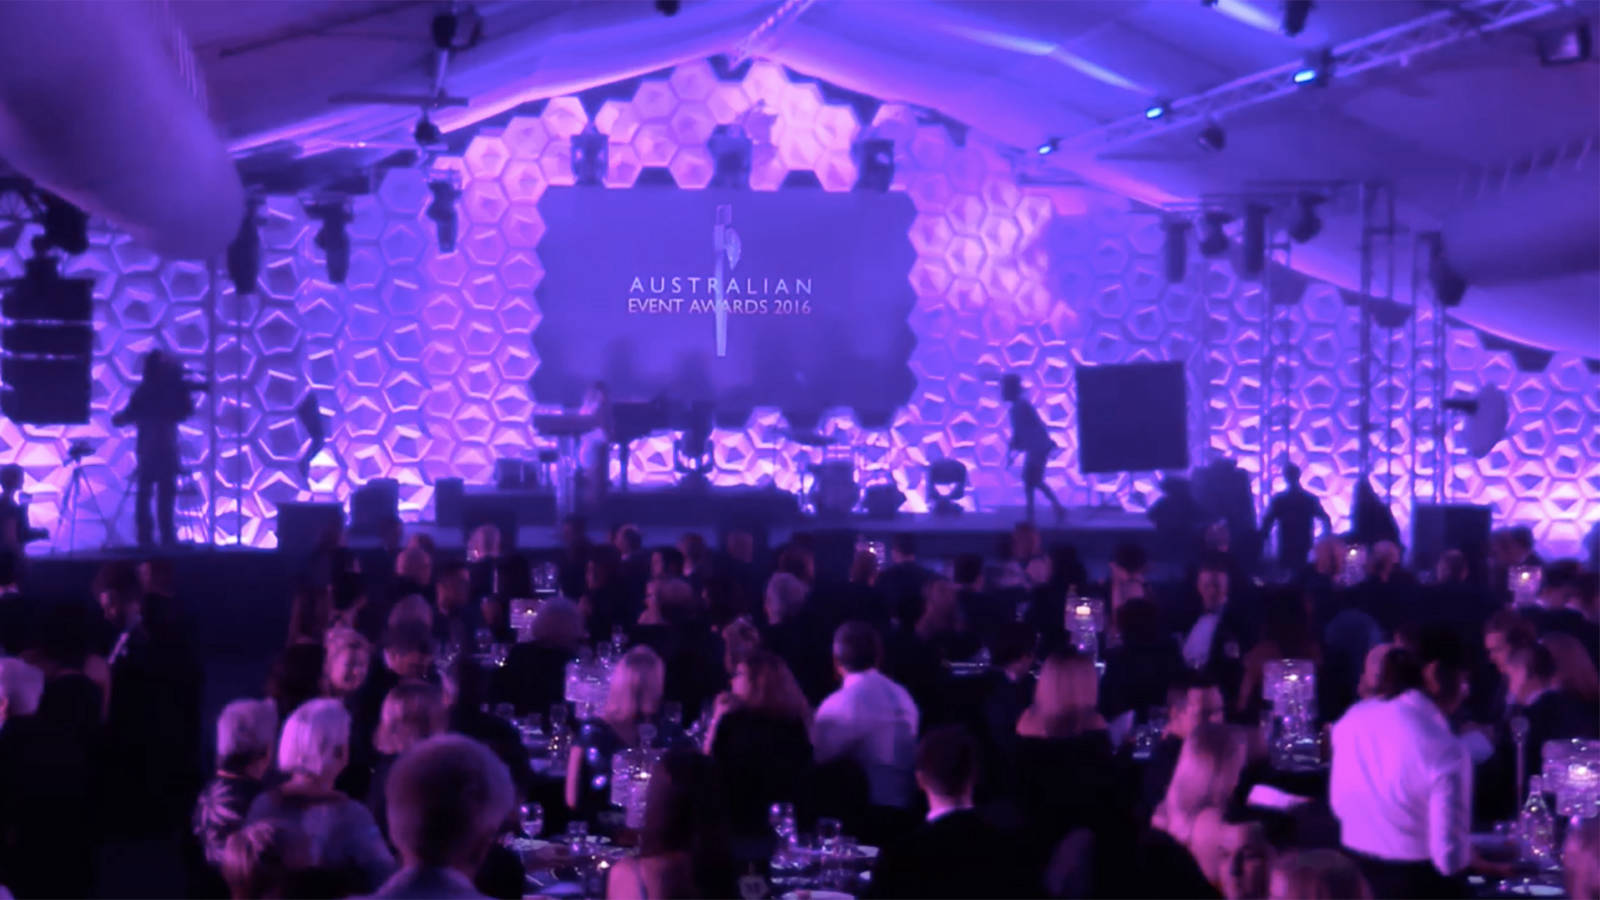 Australian Event Awards 2016 - Live Streaming